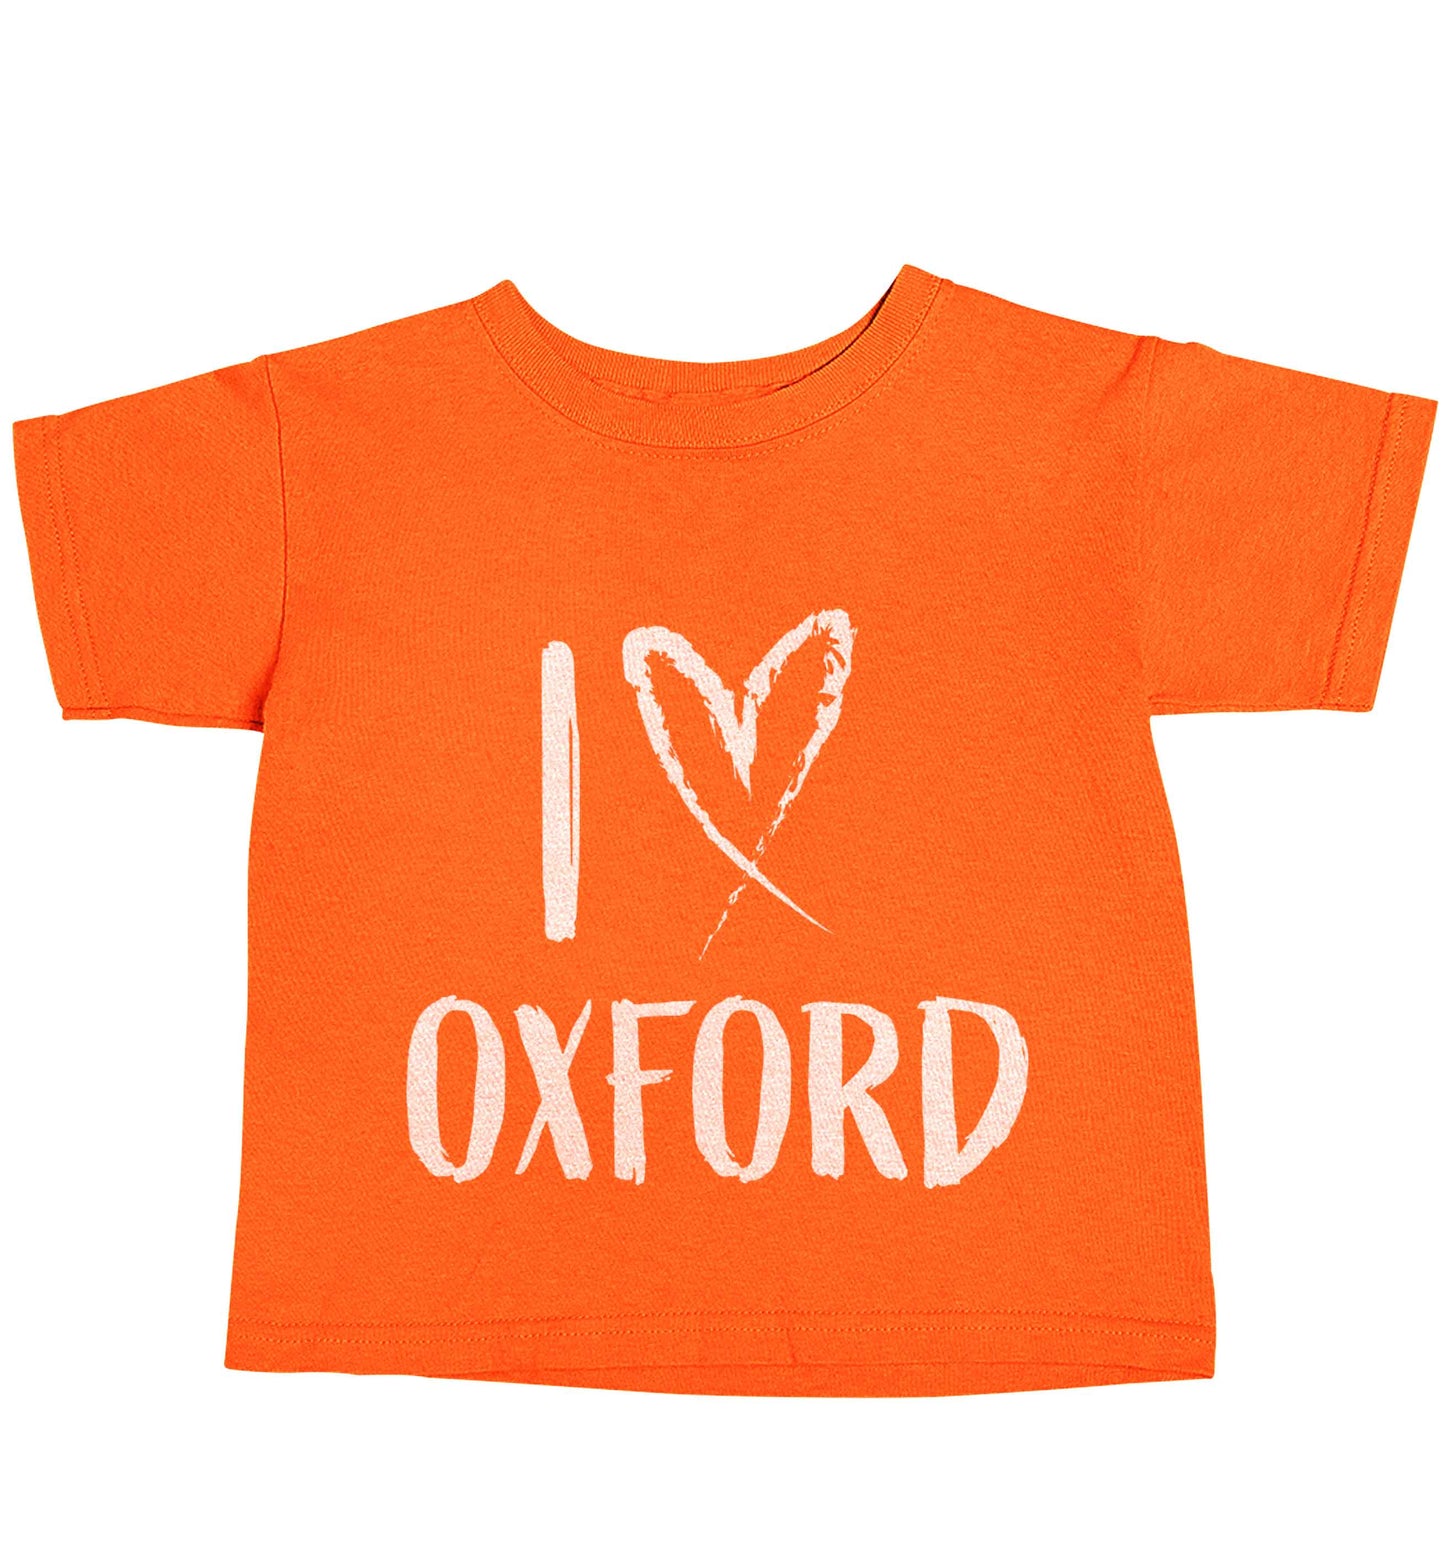 I love Oxford orange baby toddler Tshirt 2 Years